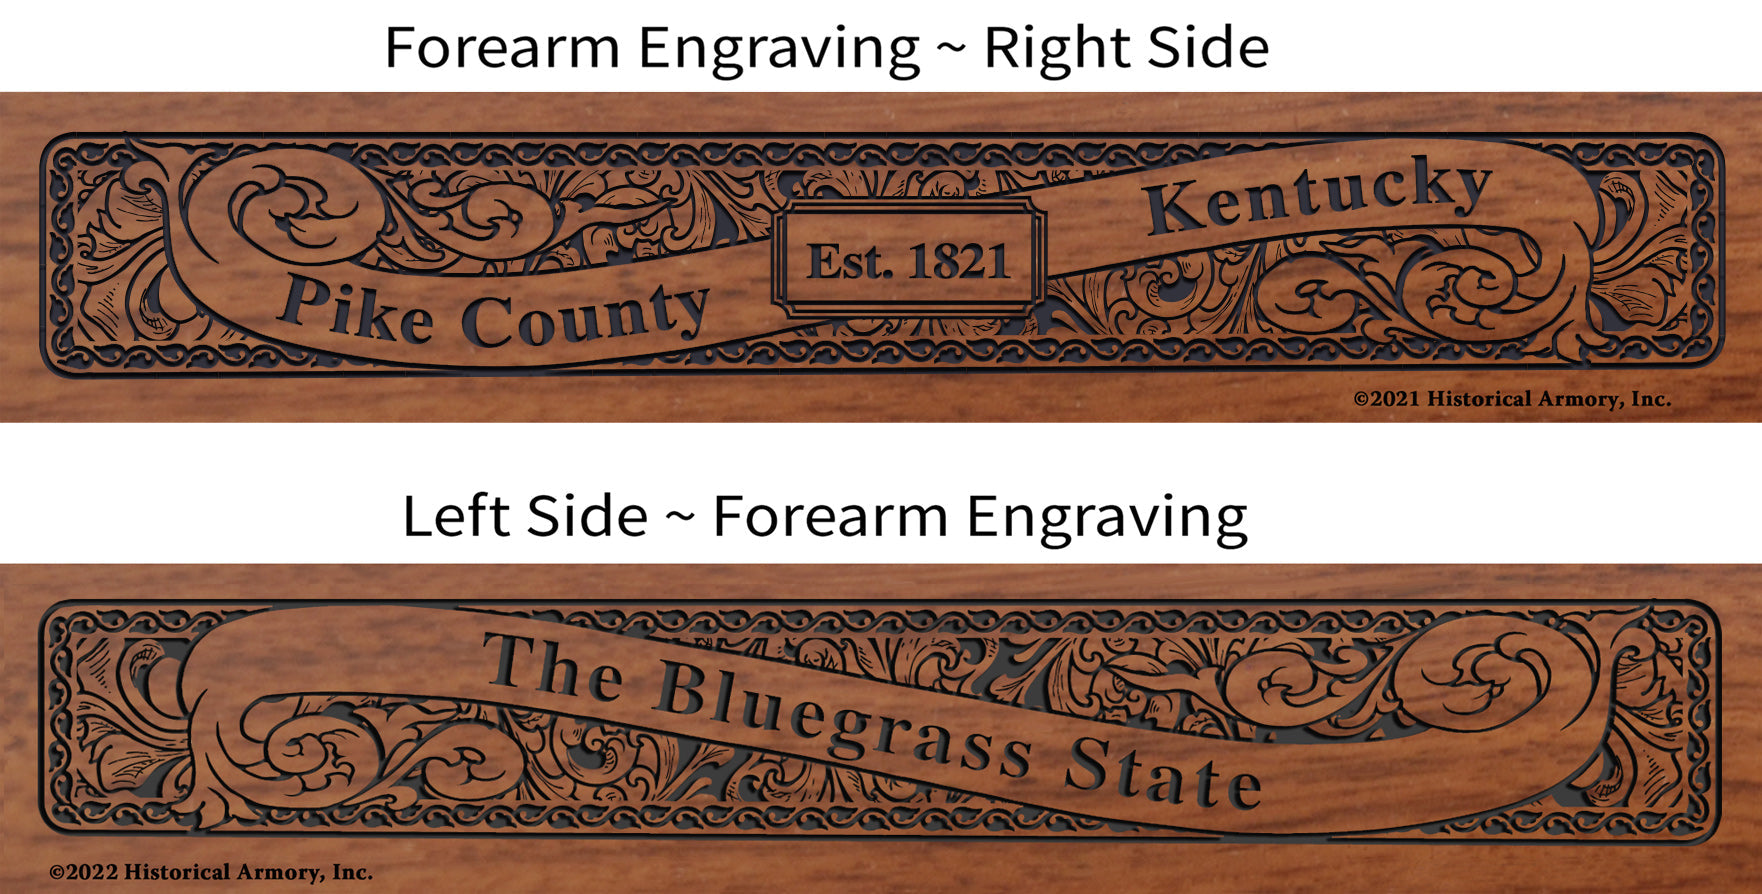 Pike County Kentucky Engraved Rifle Forearm